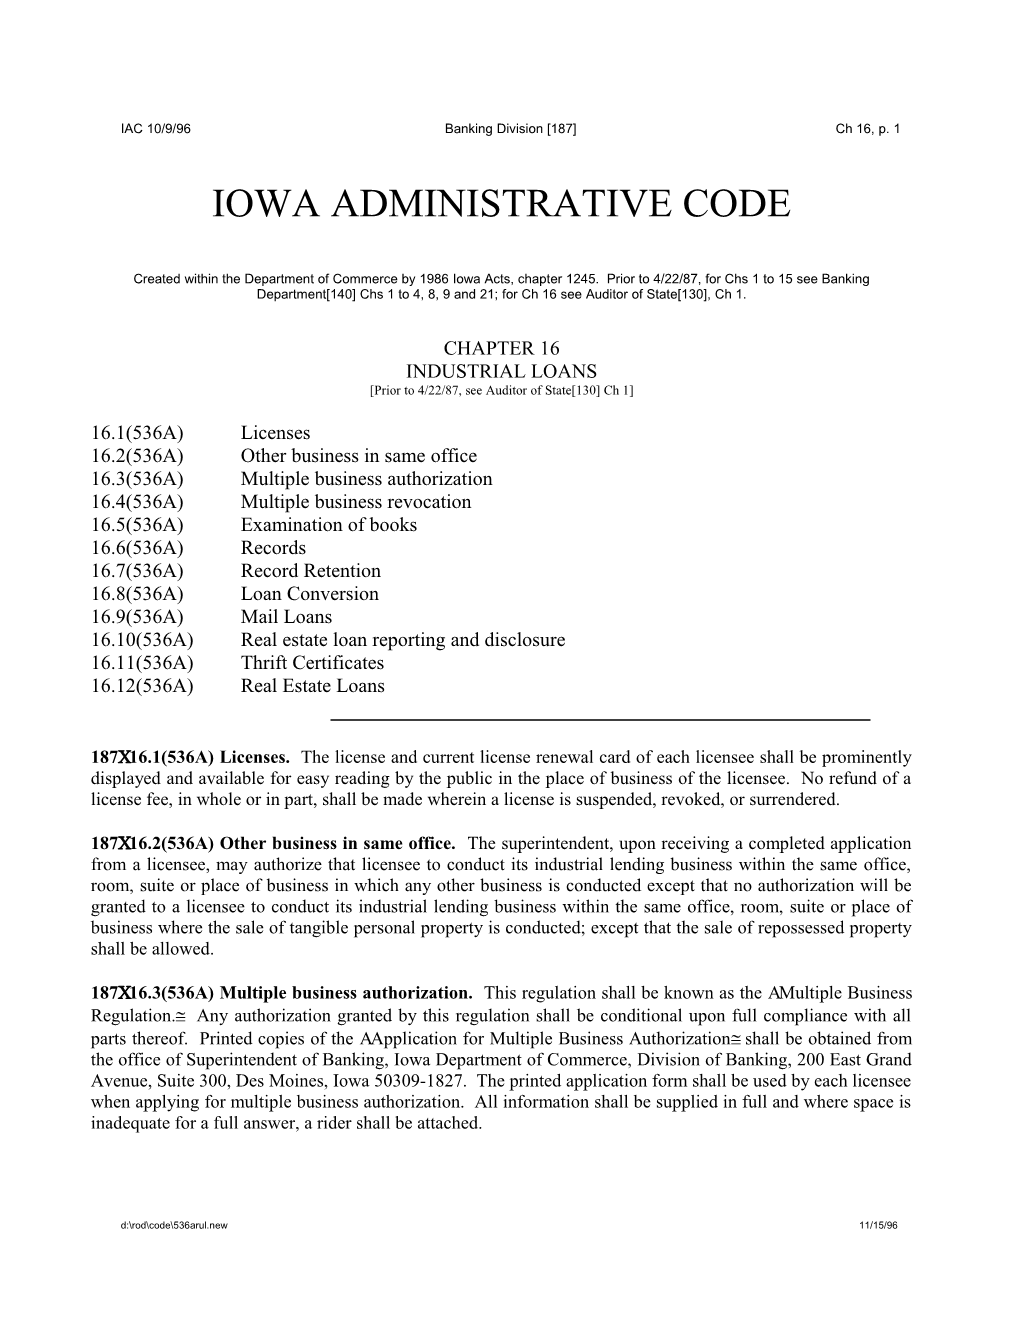 Iowa Administrative Code